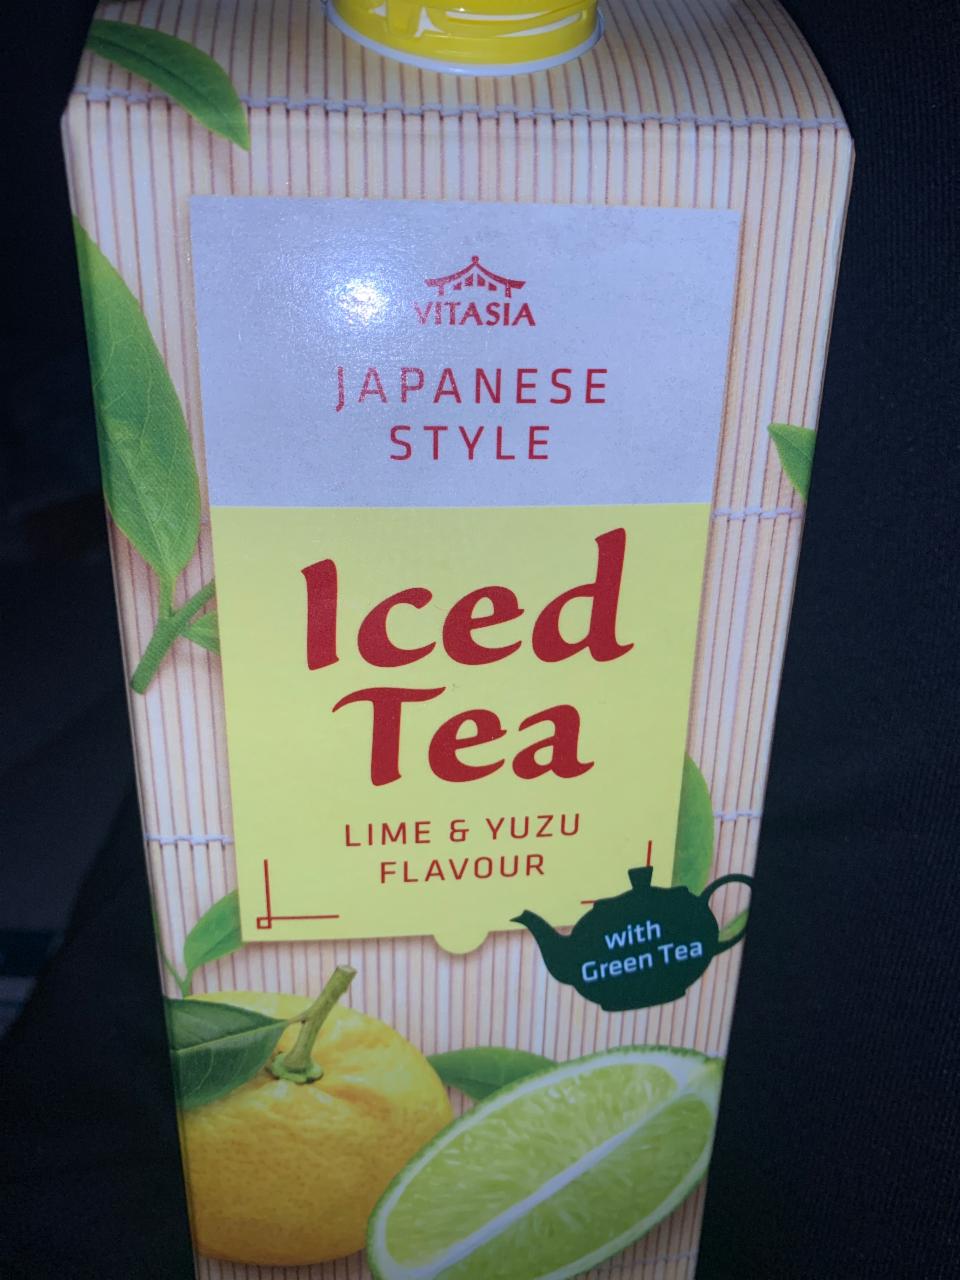 Fotografie - Japanese Style Iced Tea Lime & Yuzu flavour with Green Tea Vitasia